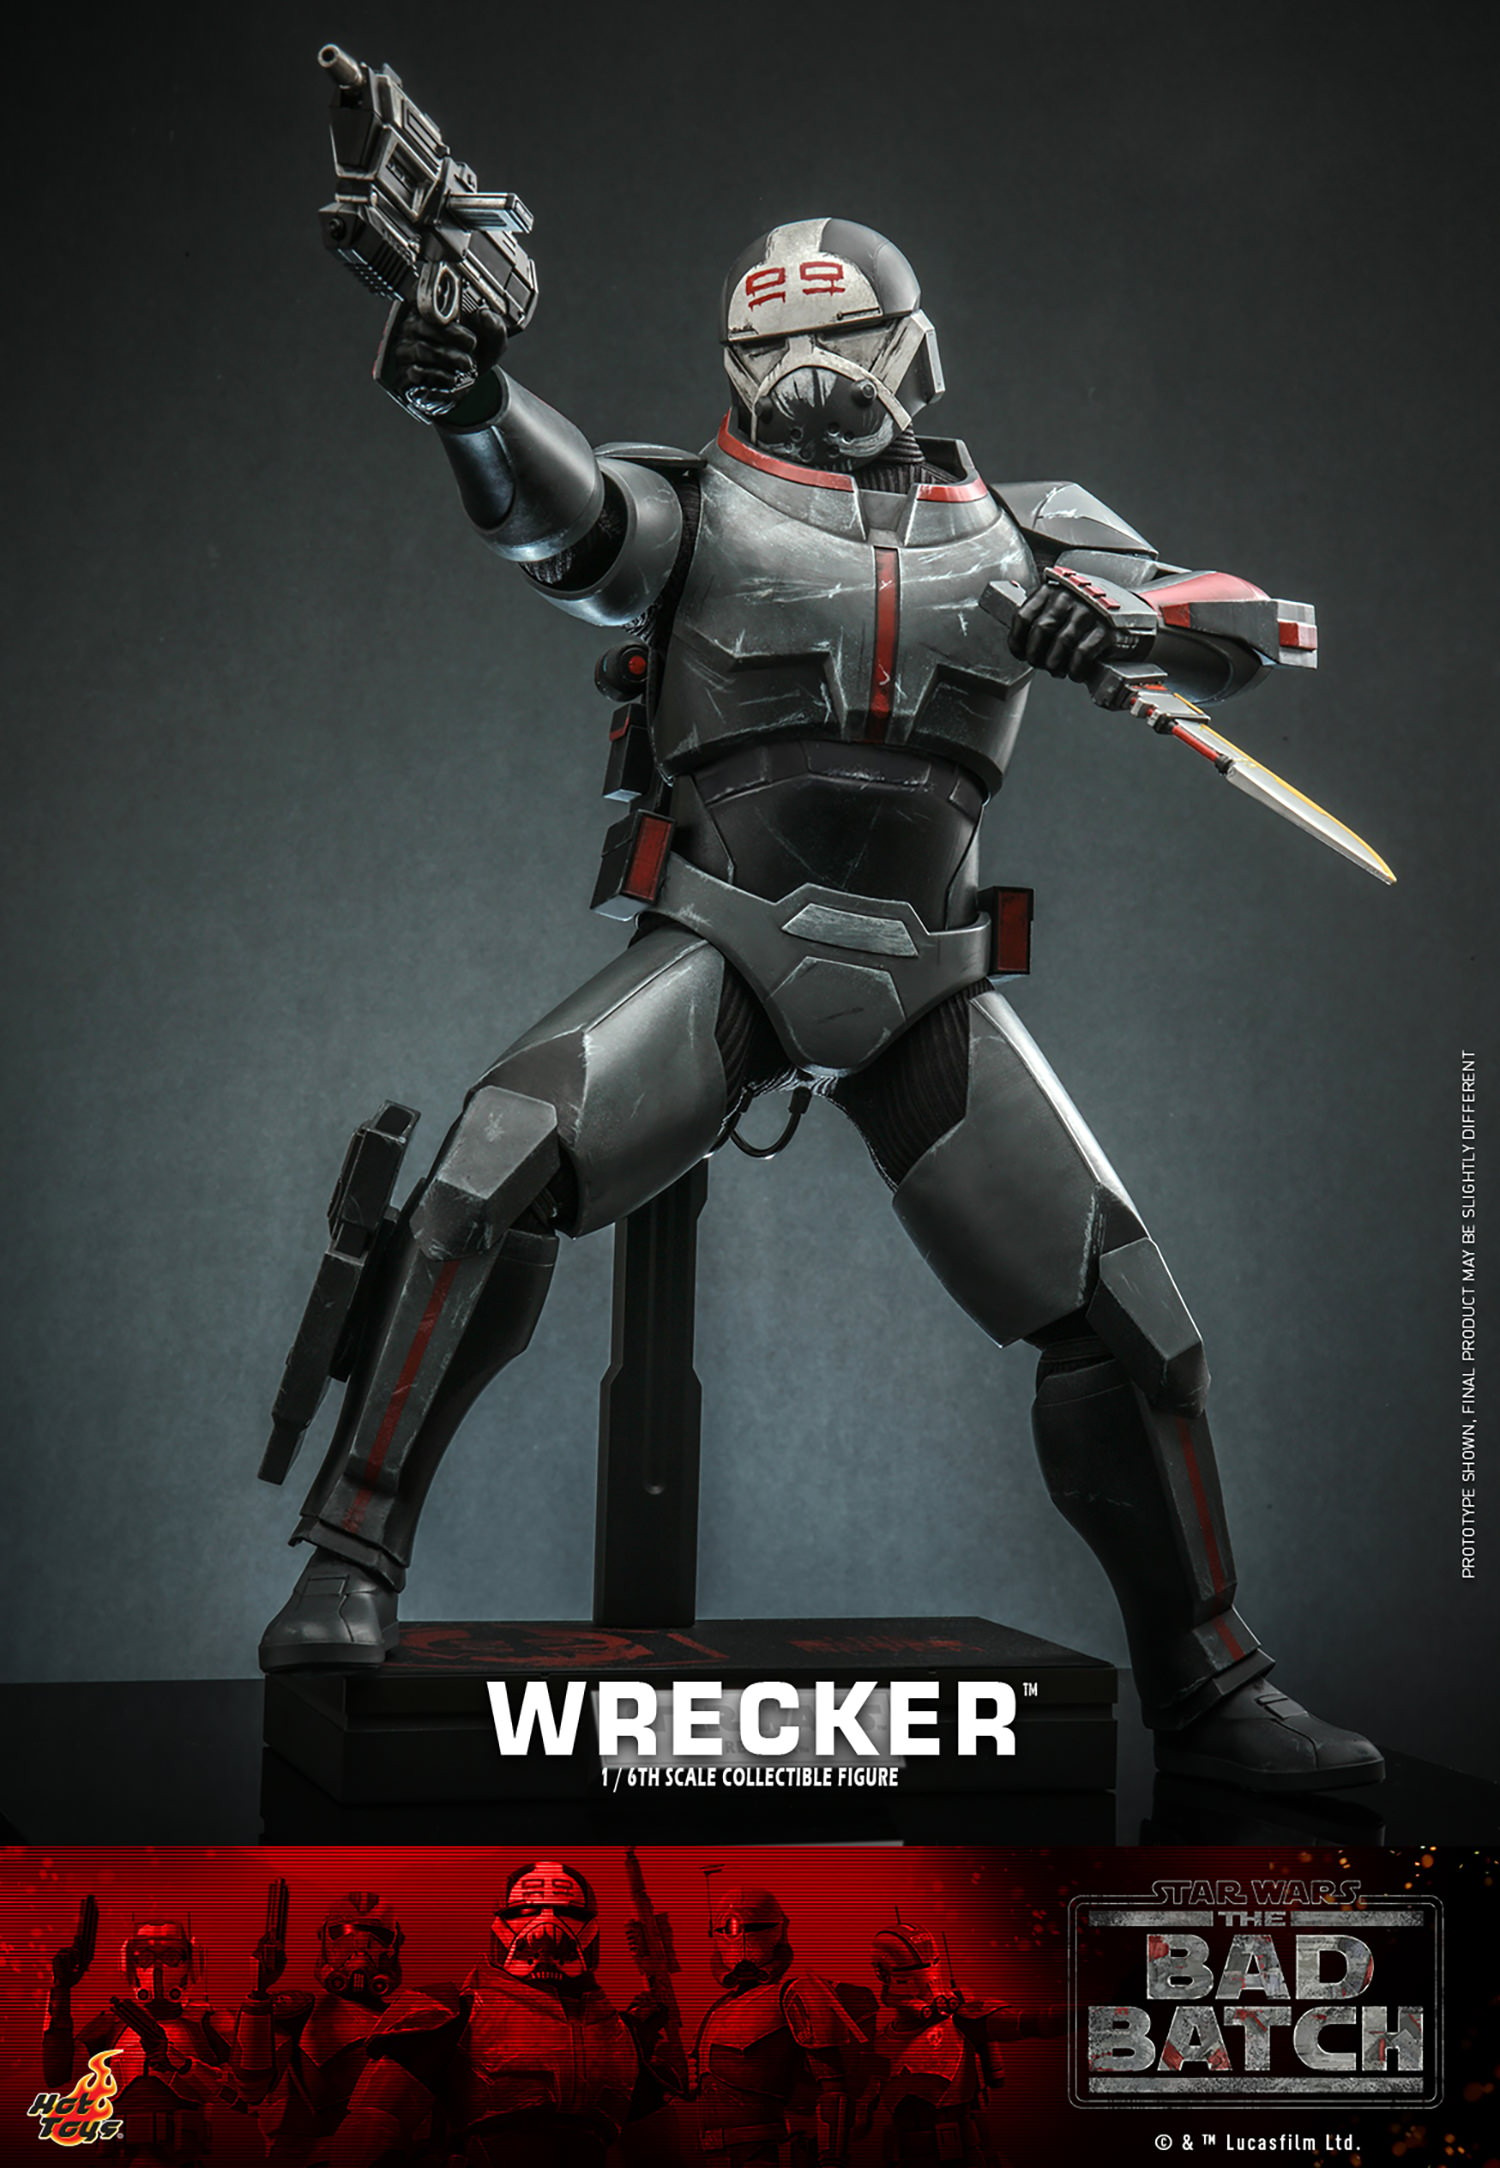 Wrecker™- Prototype Shown